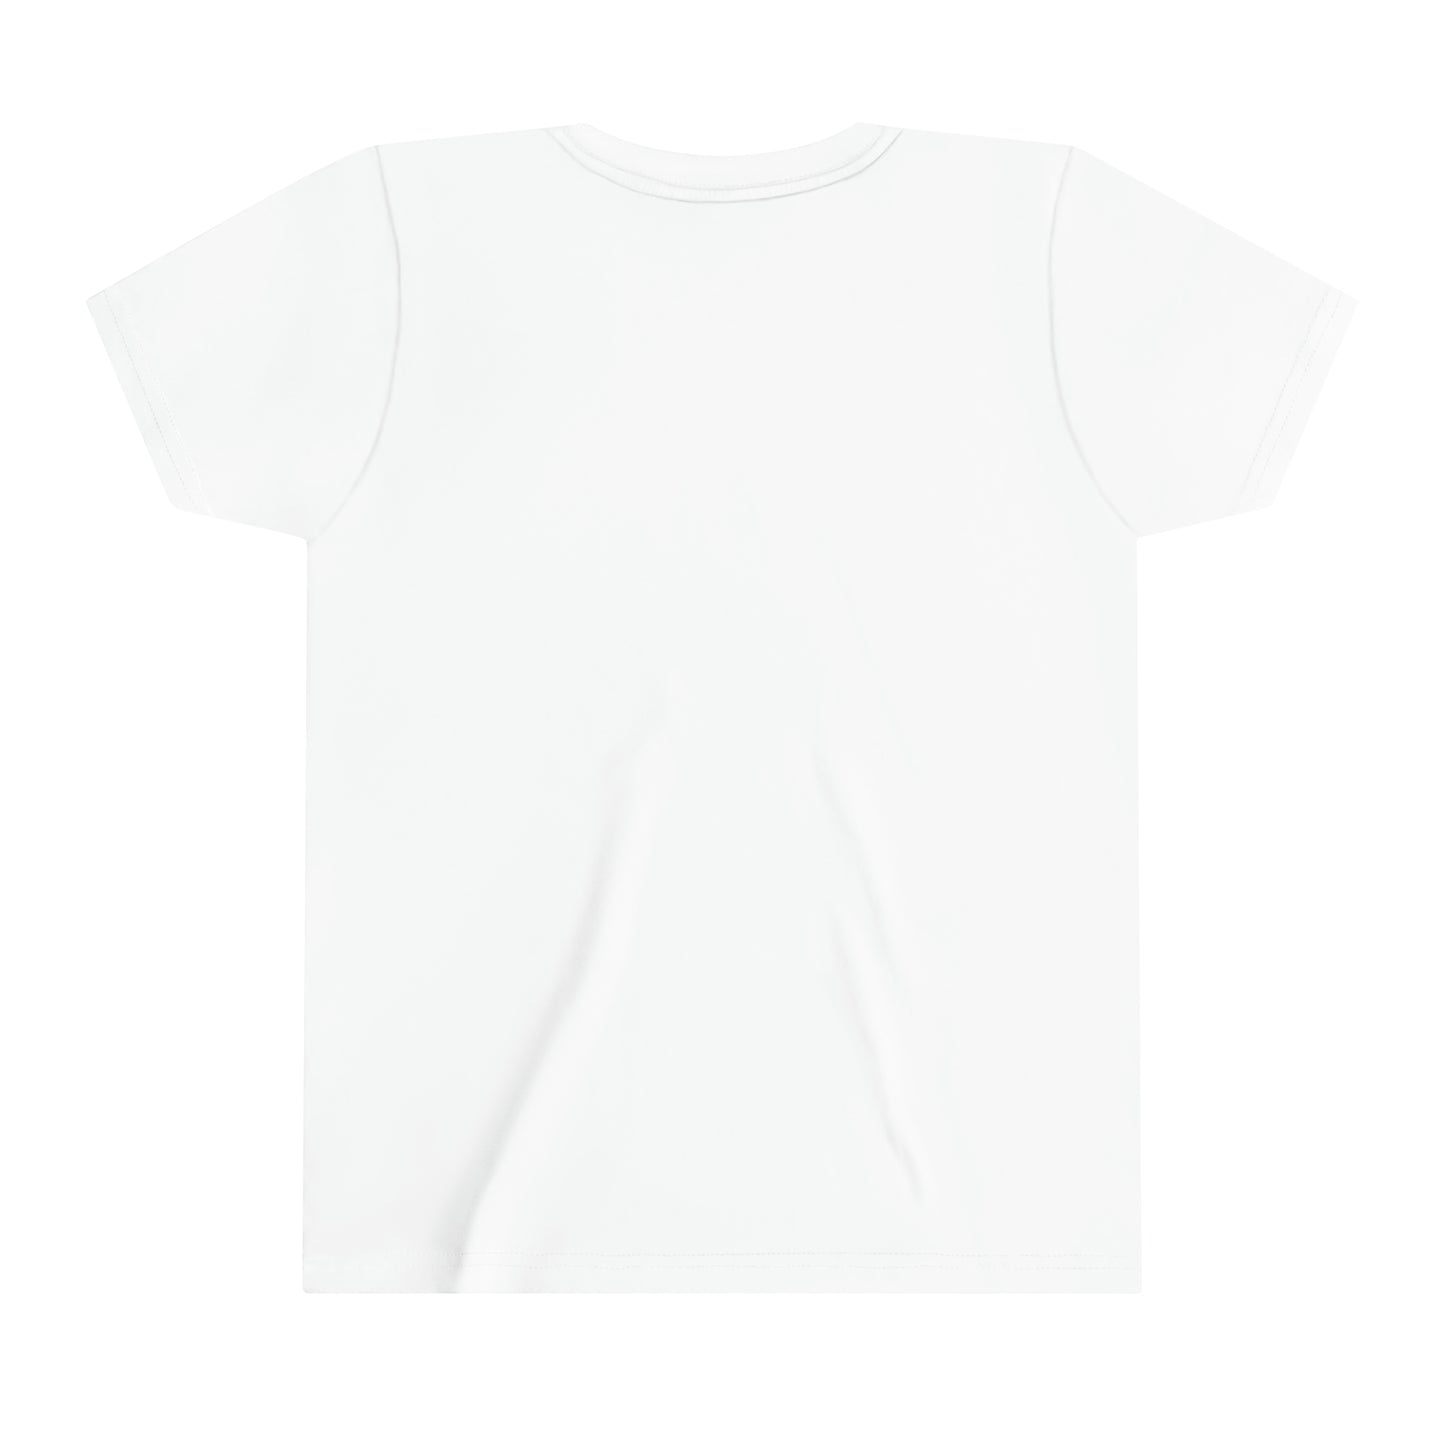 Liberty Short Sleeve T-shirt (Youth)